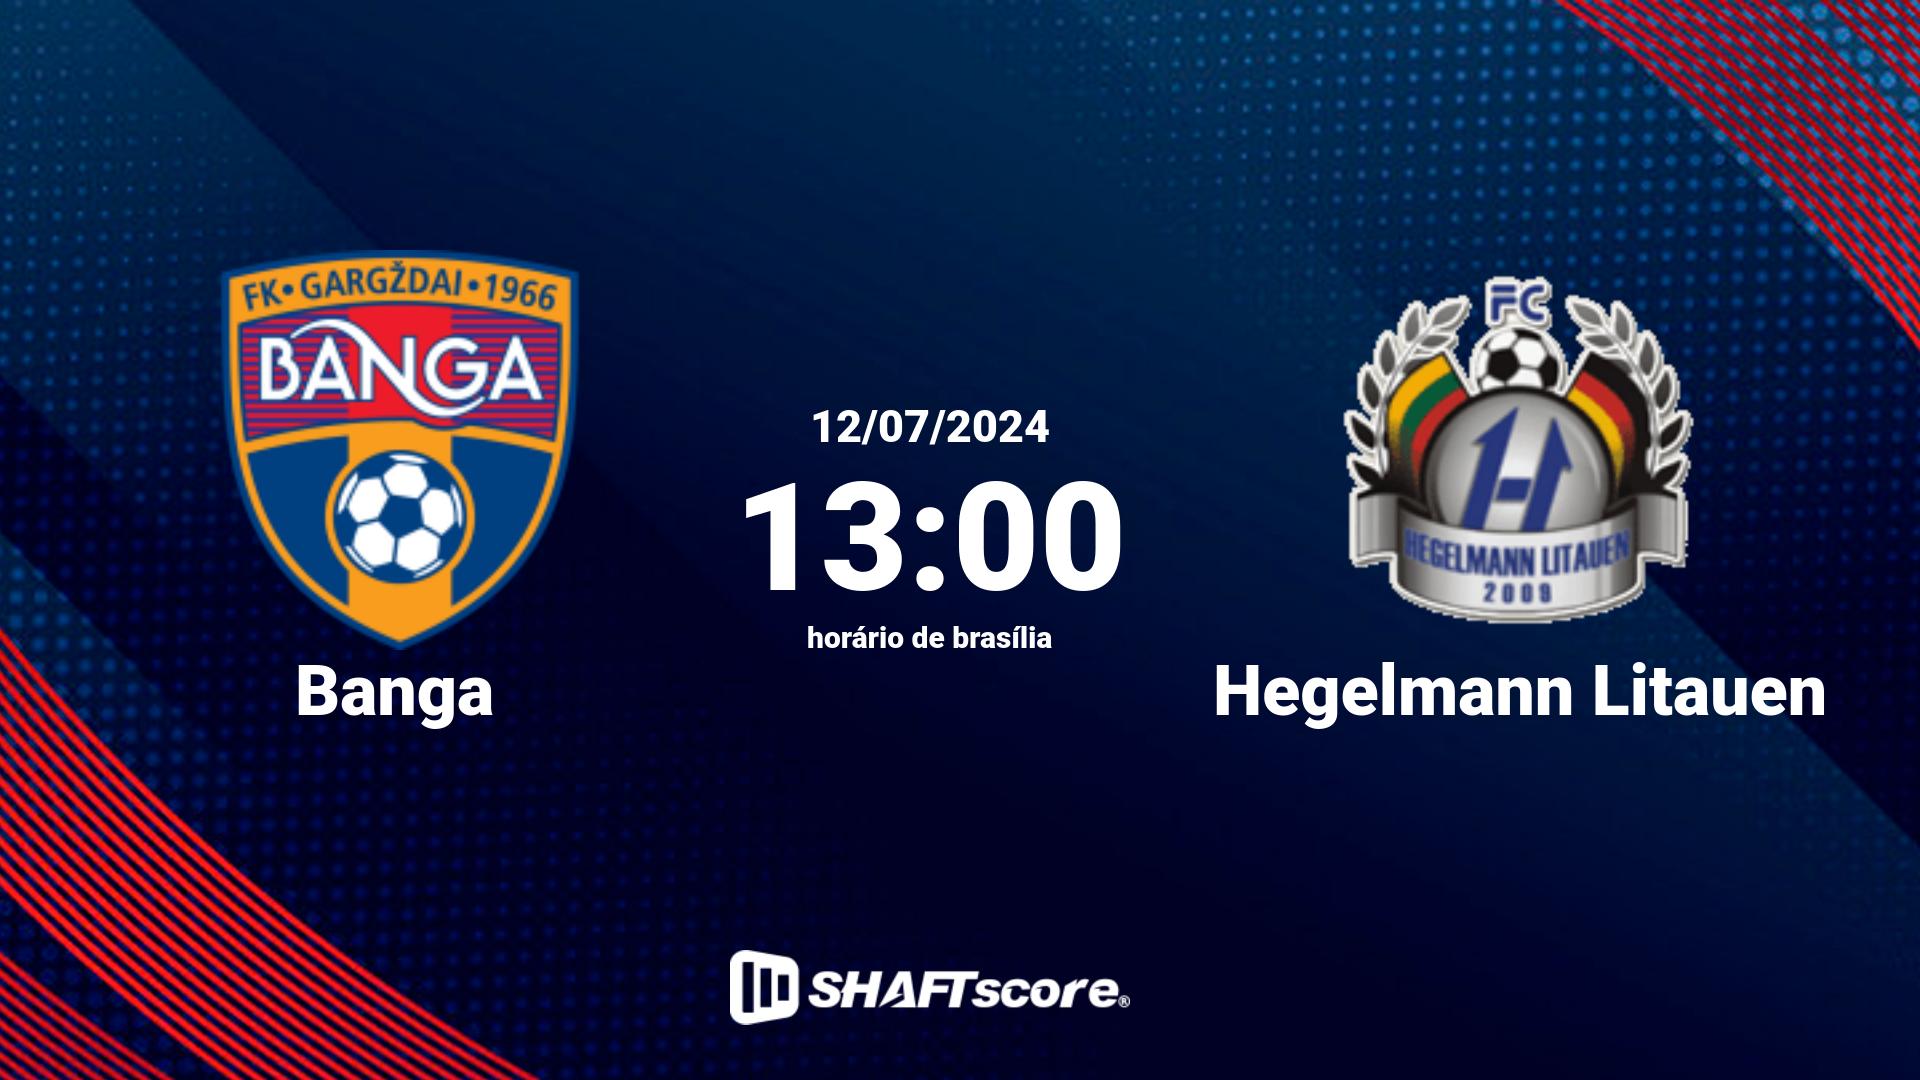 Estatísticas do jogo Banga vs Hegelmann Litauen 12.07 13:00